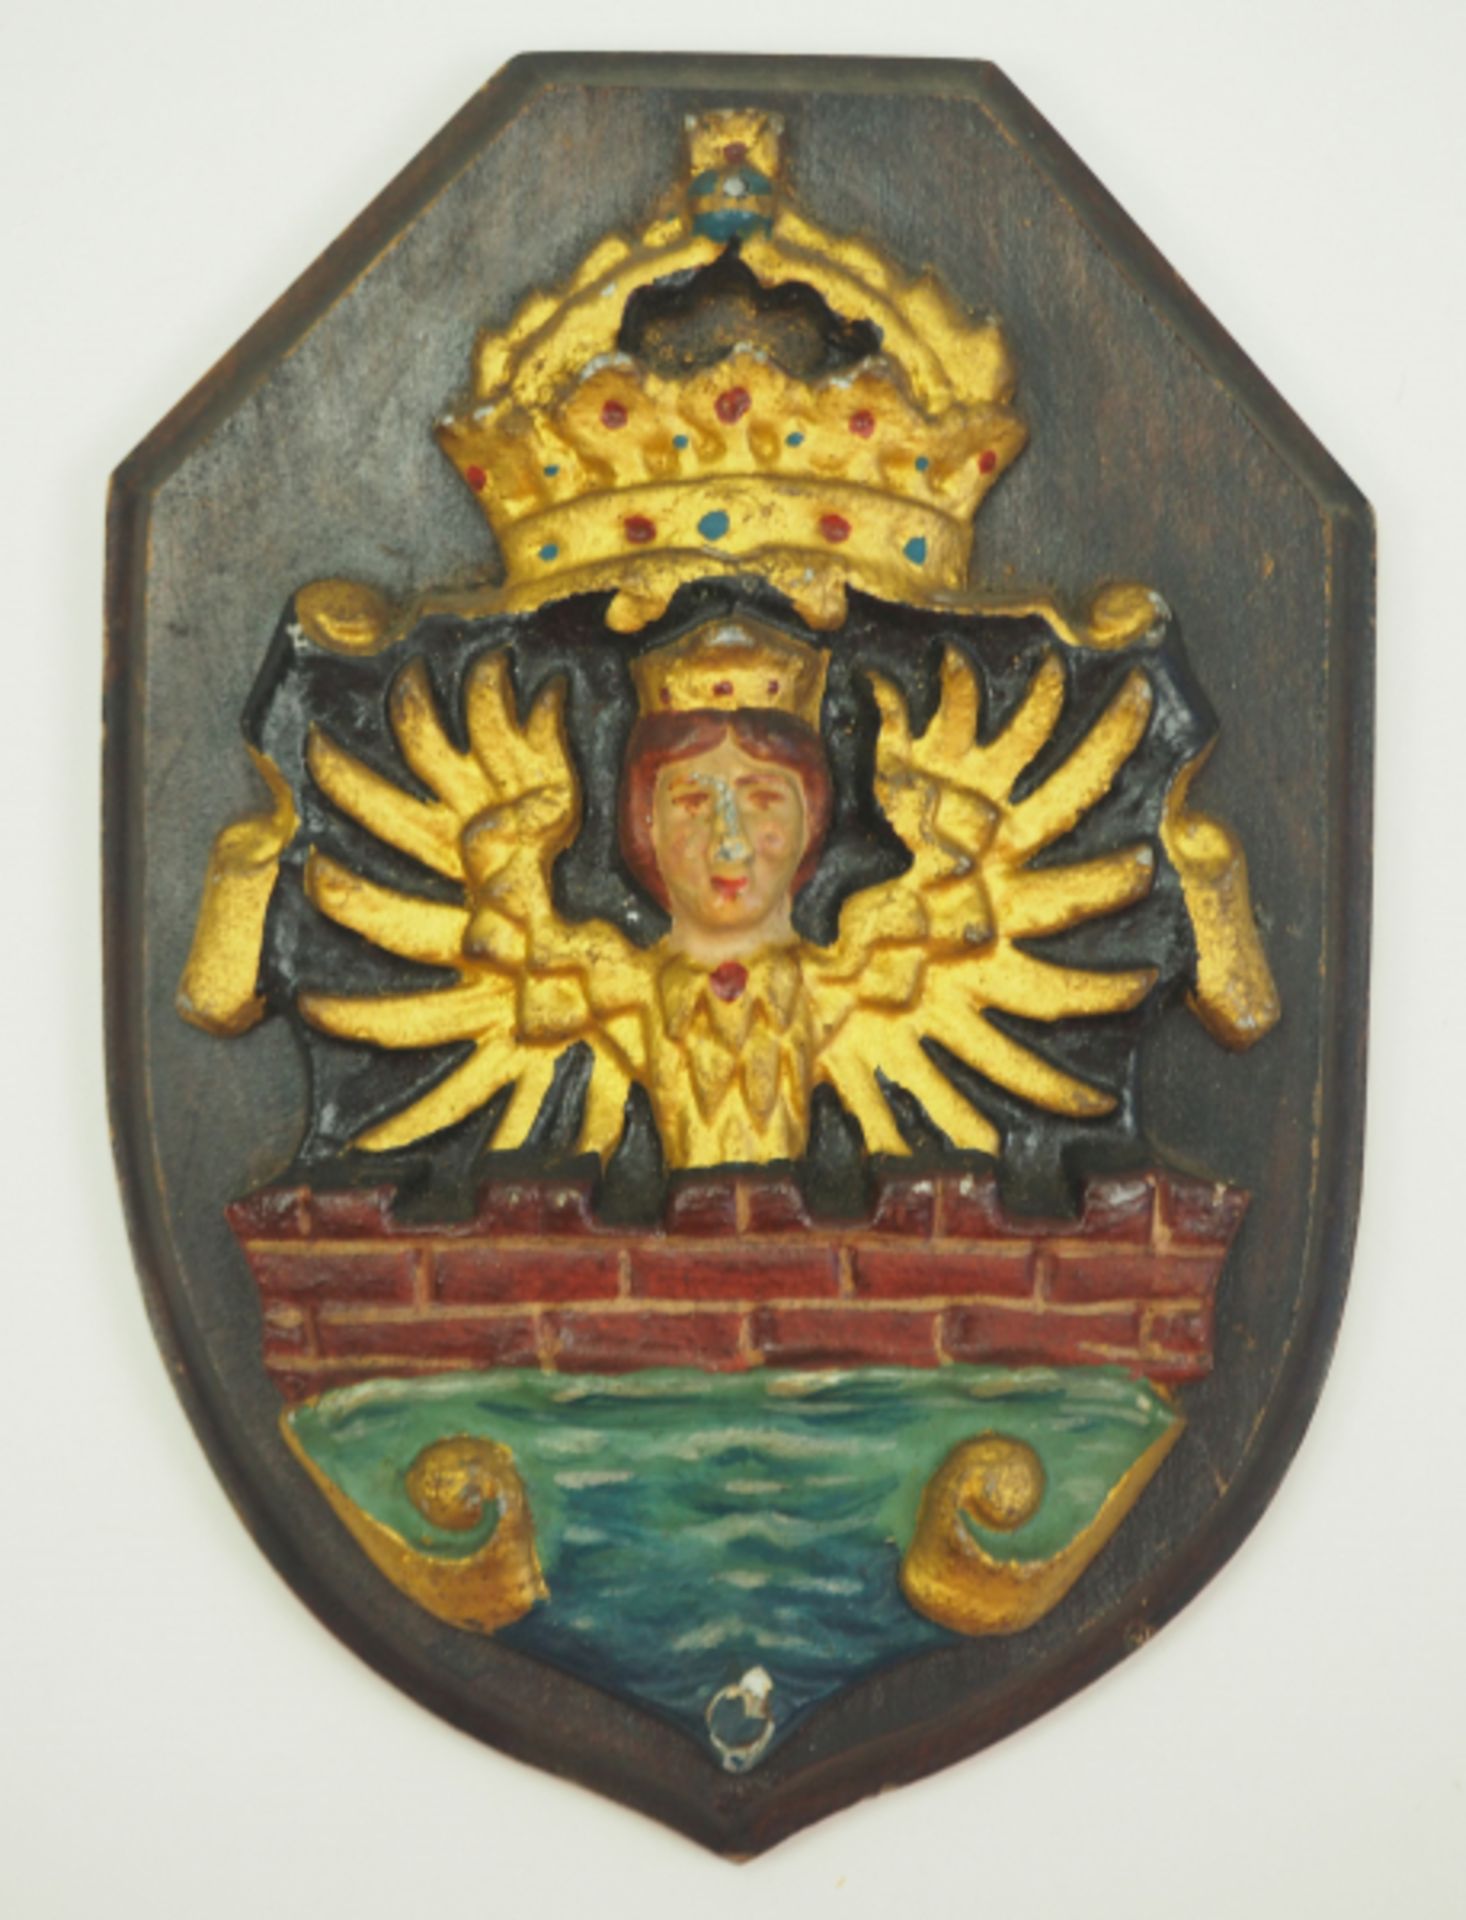 Schul-Kreuzer Emden III - Bugwappen.Plastisch geformtes Wappen der Hansestadt Emden, das dem Kreuzer